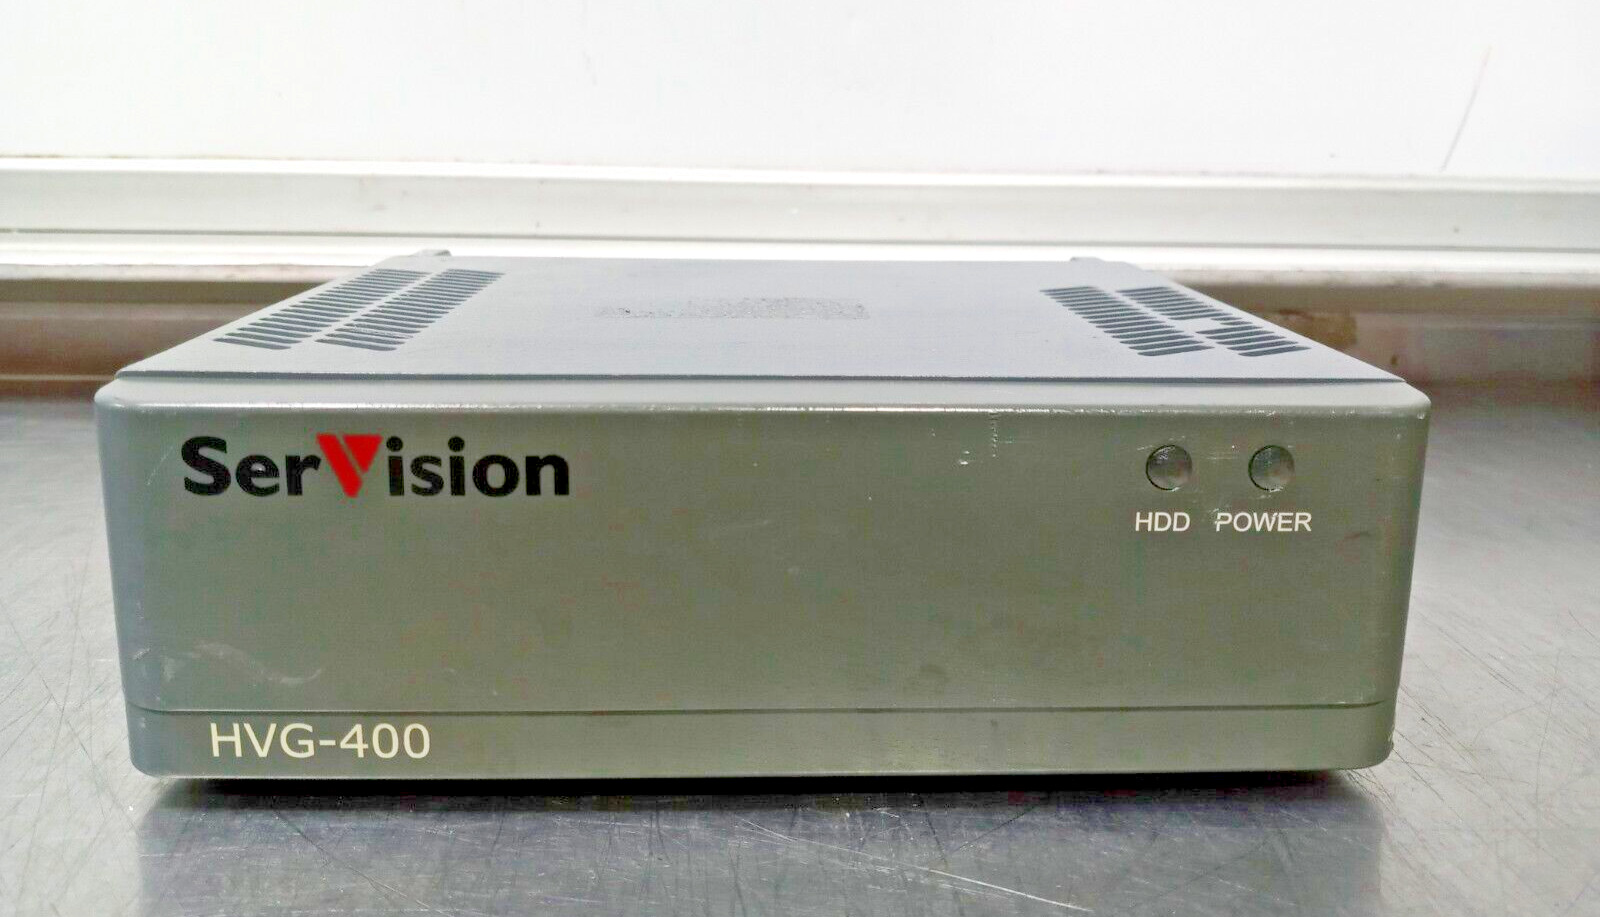 Servision HVG-400 DVR 9900-060-A11 Embedded Video Security Gateway